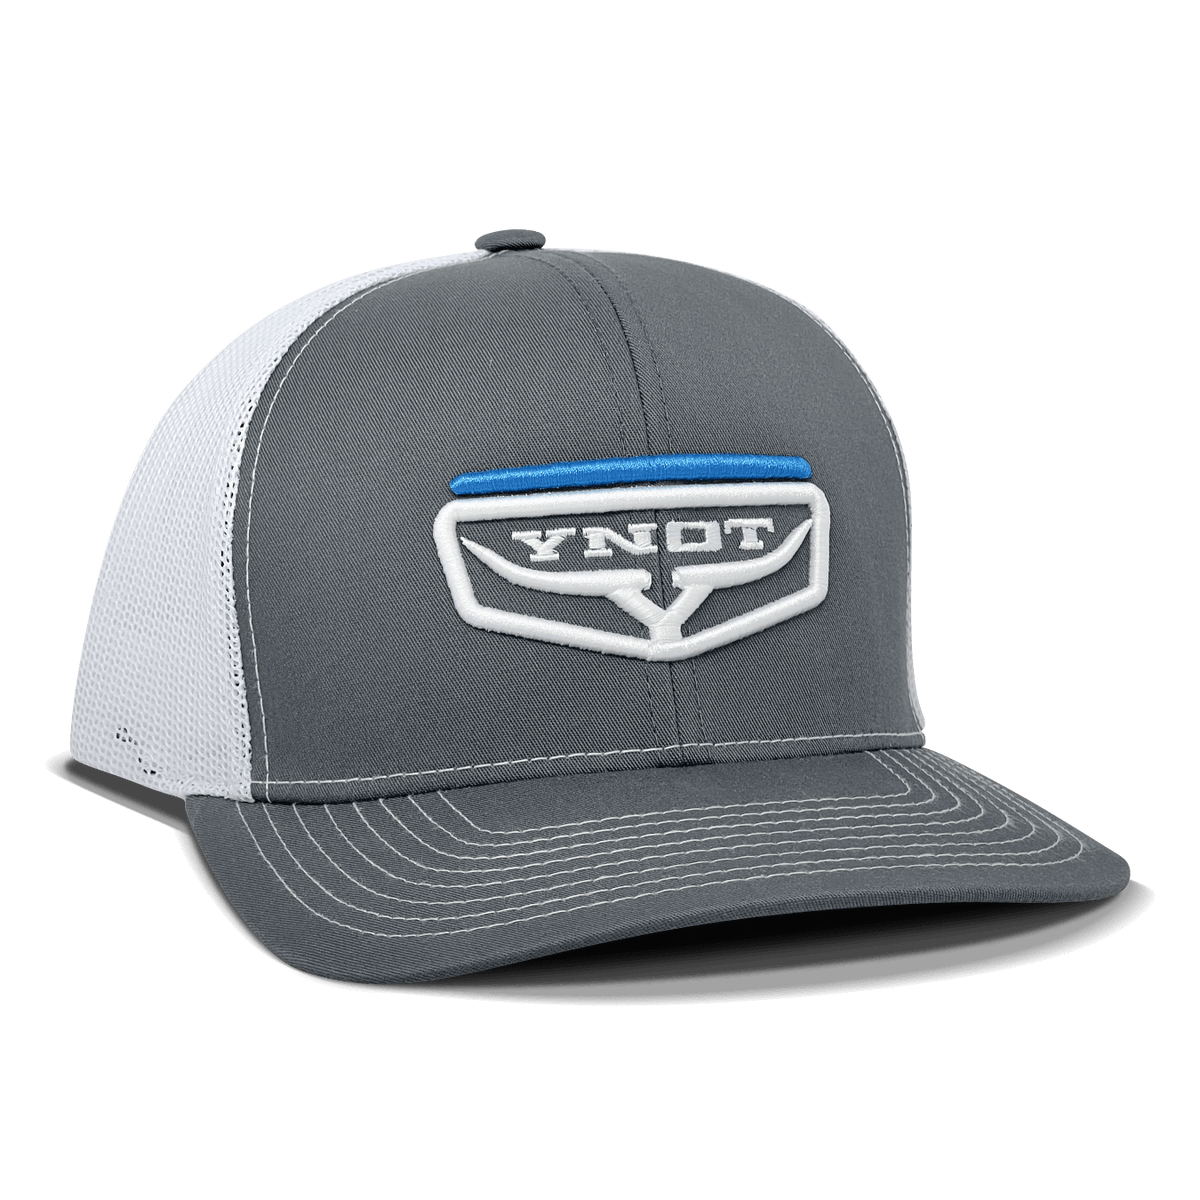 YNOT Hat – YNOT Lifestyle Brand